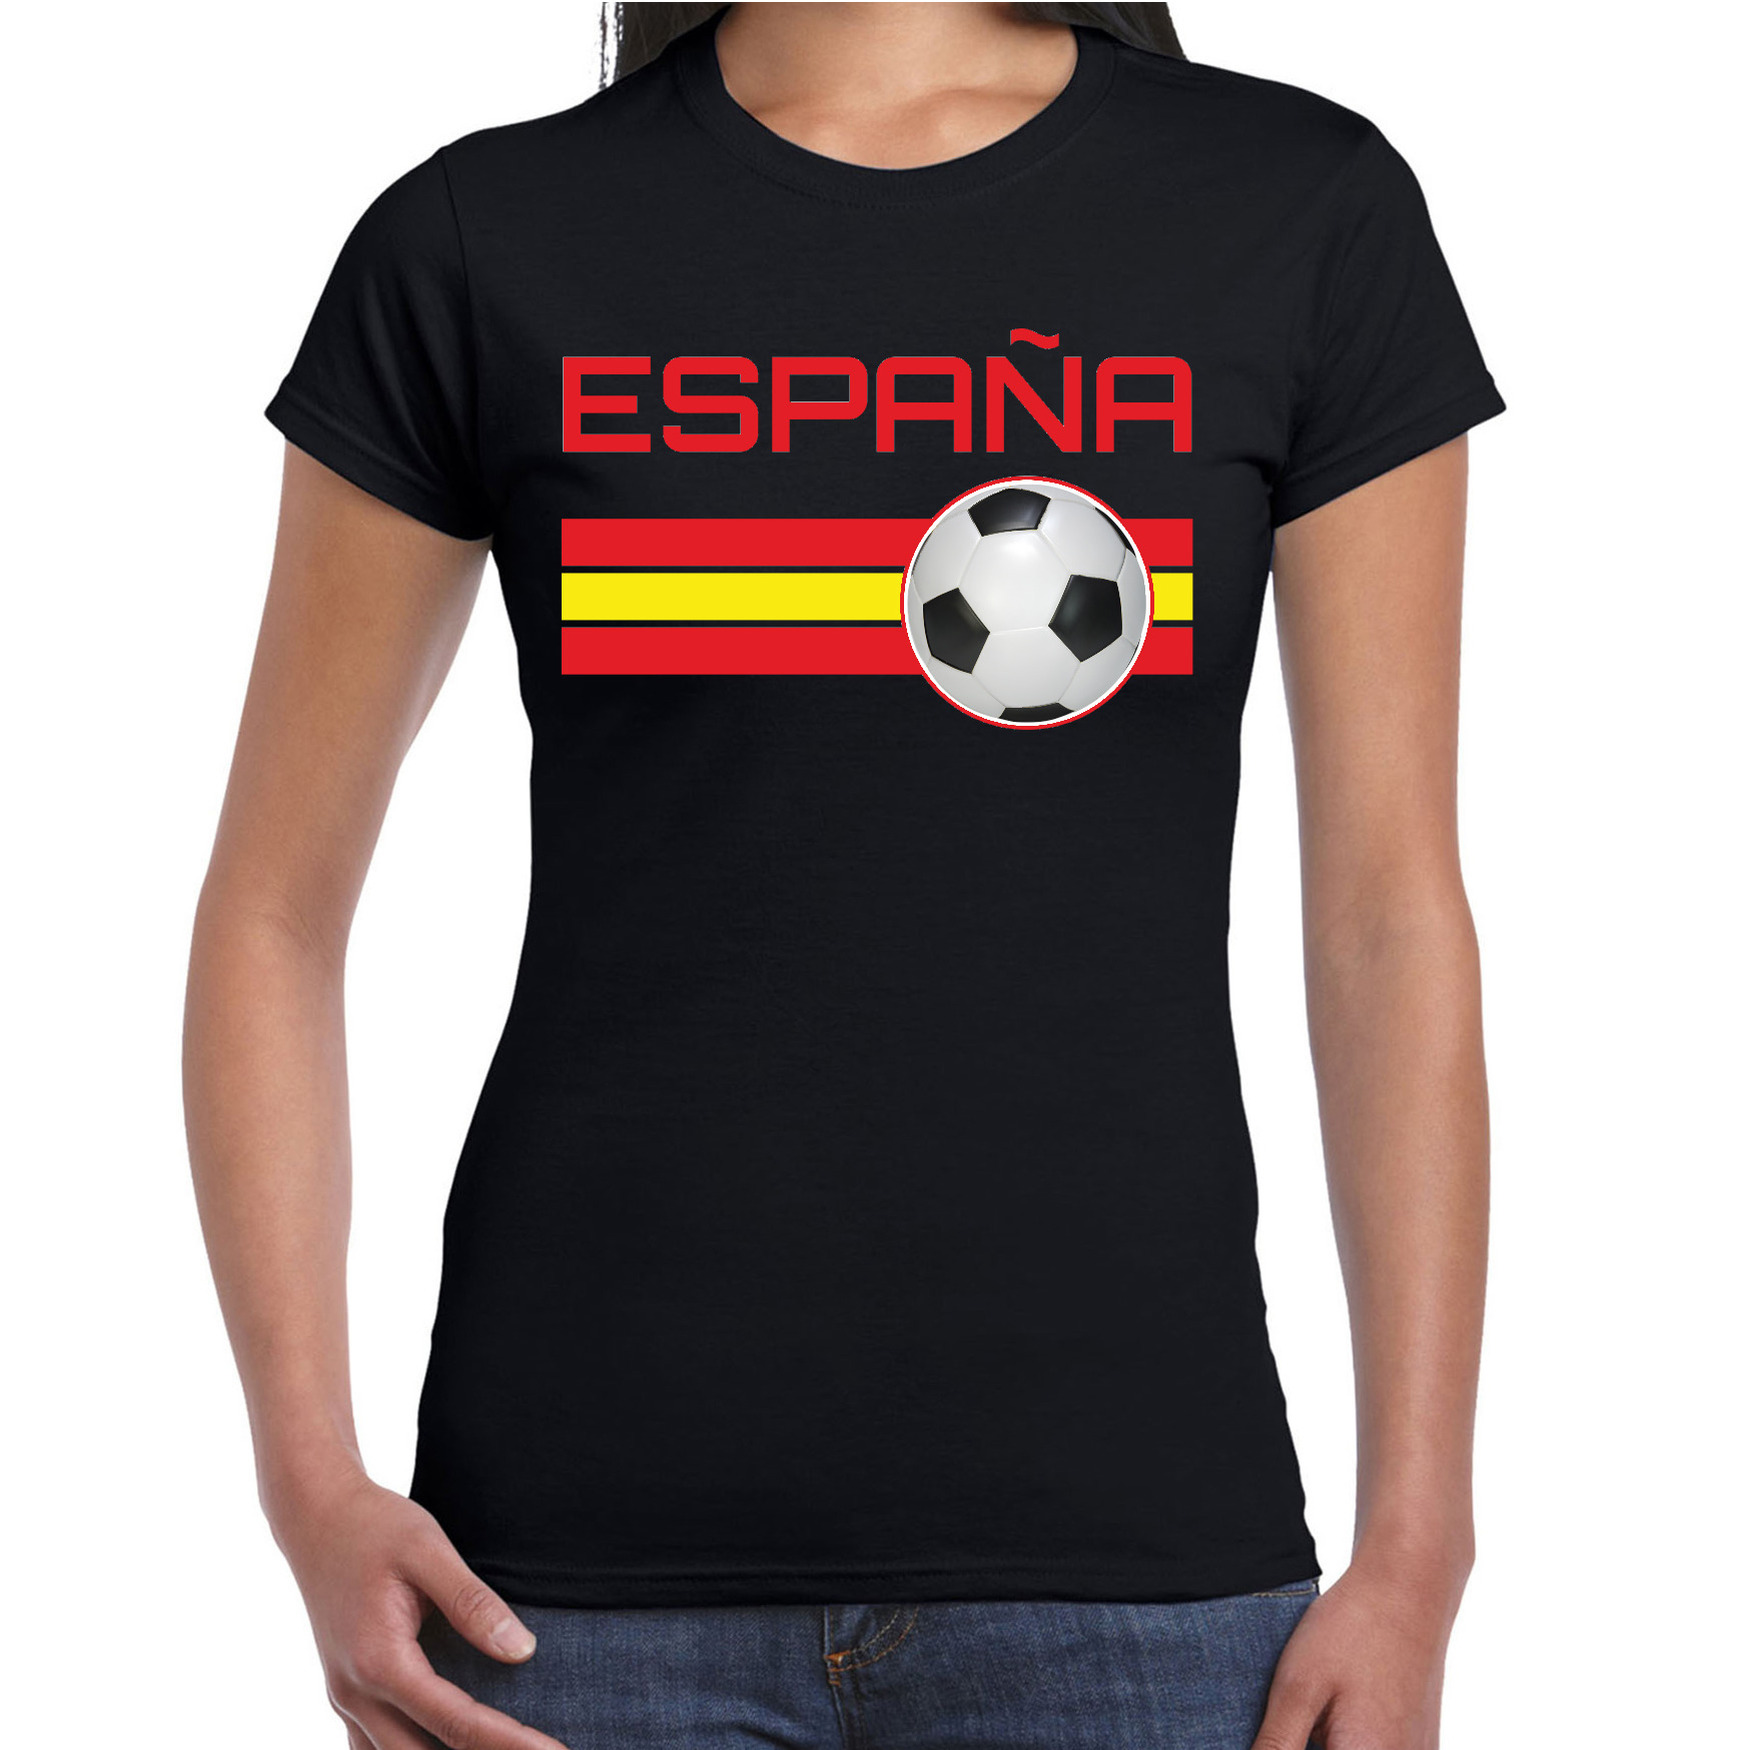 Espana-Spanje voetbal-landen shirt met voetbal en Spaanse vlag zwart voor dames